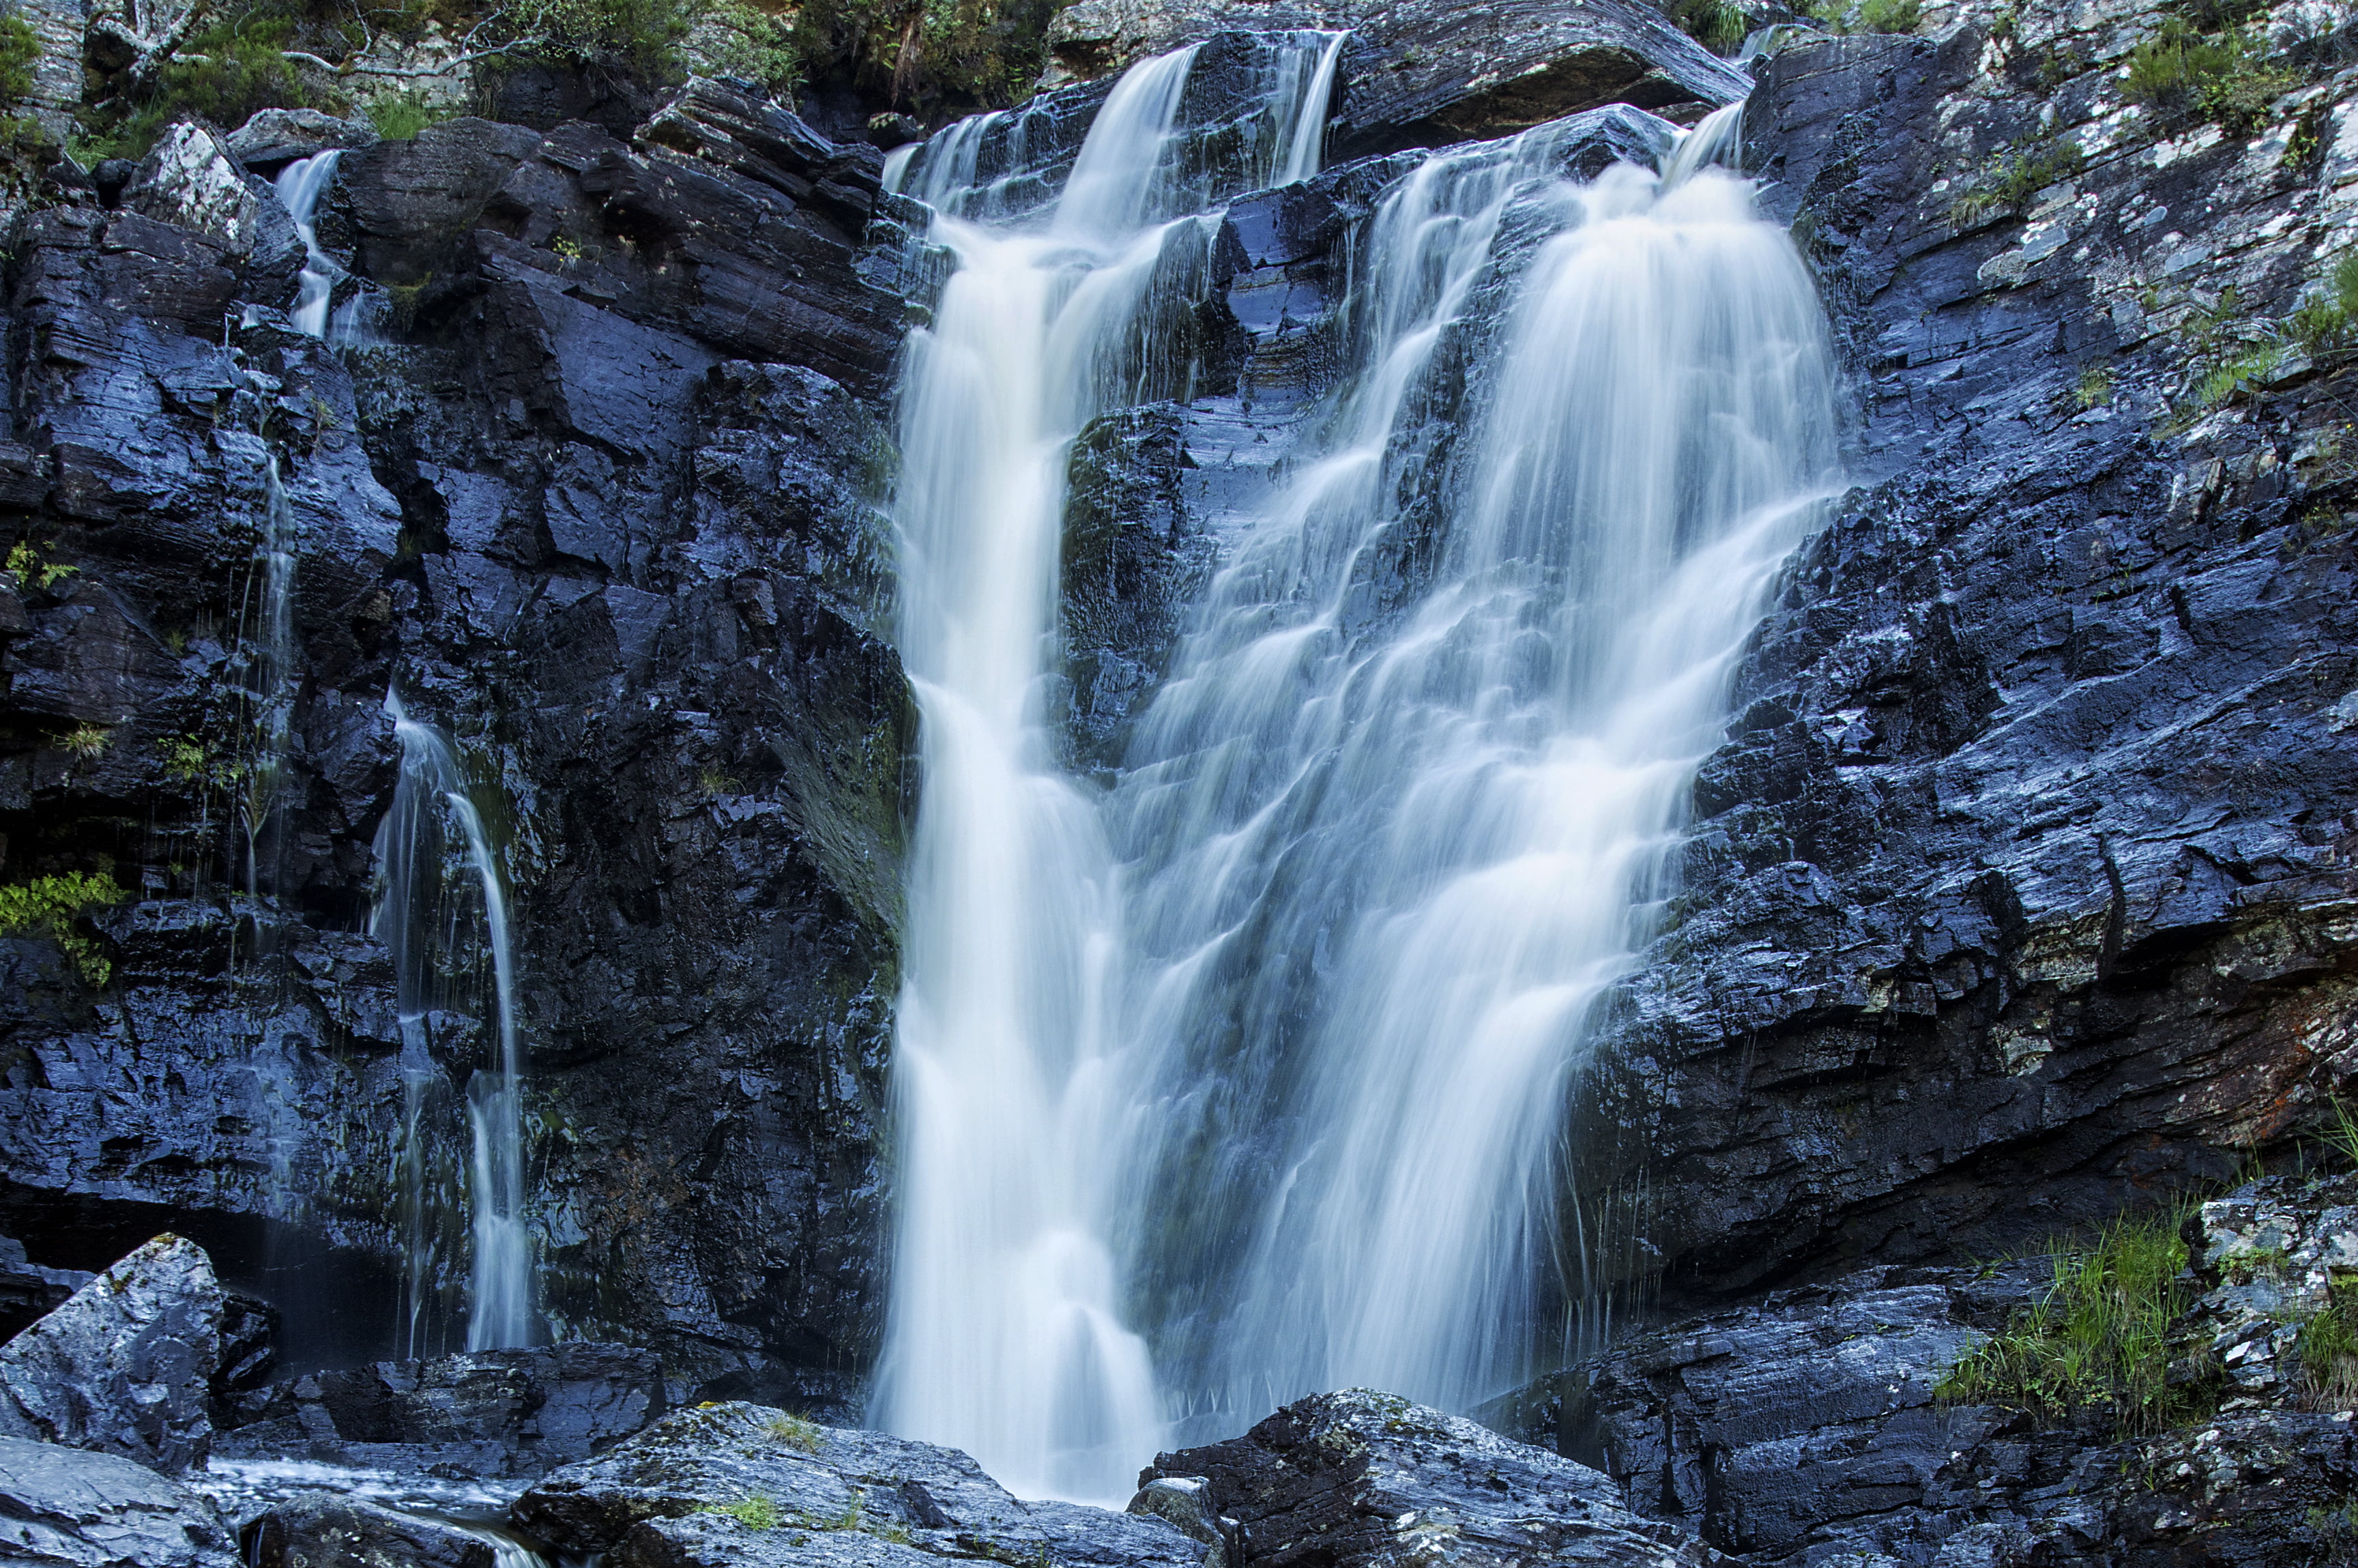 tipelapse photo of waterfalls during daytime, highlands, scotland, highlands, scotland